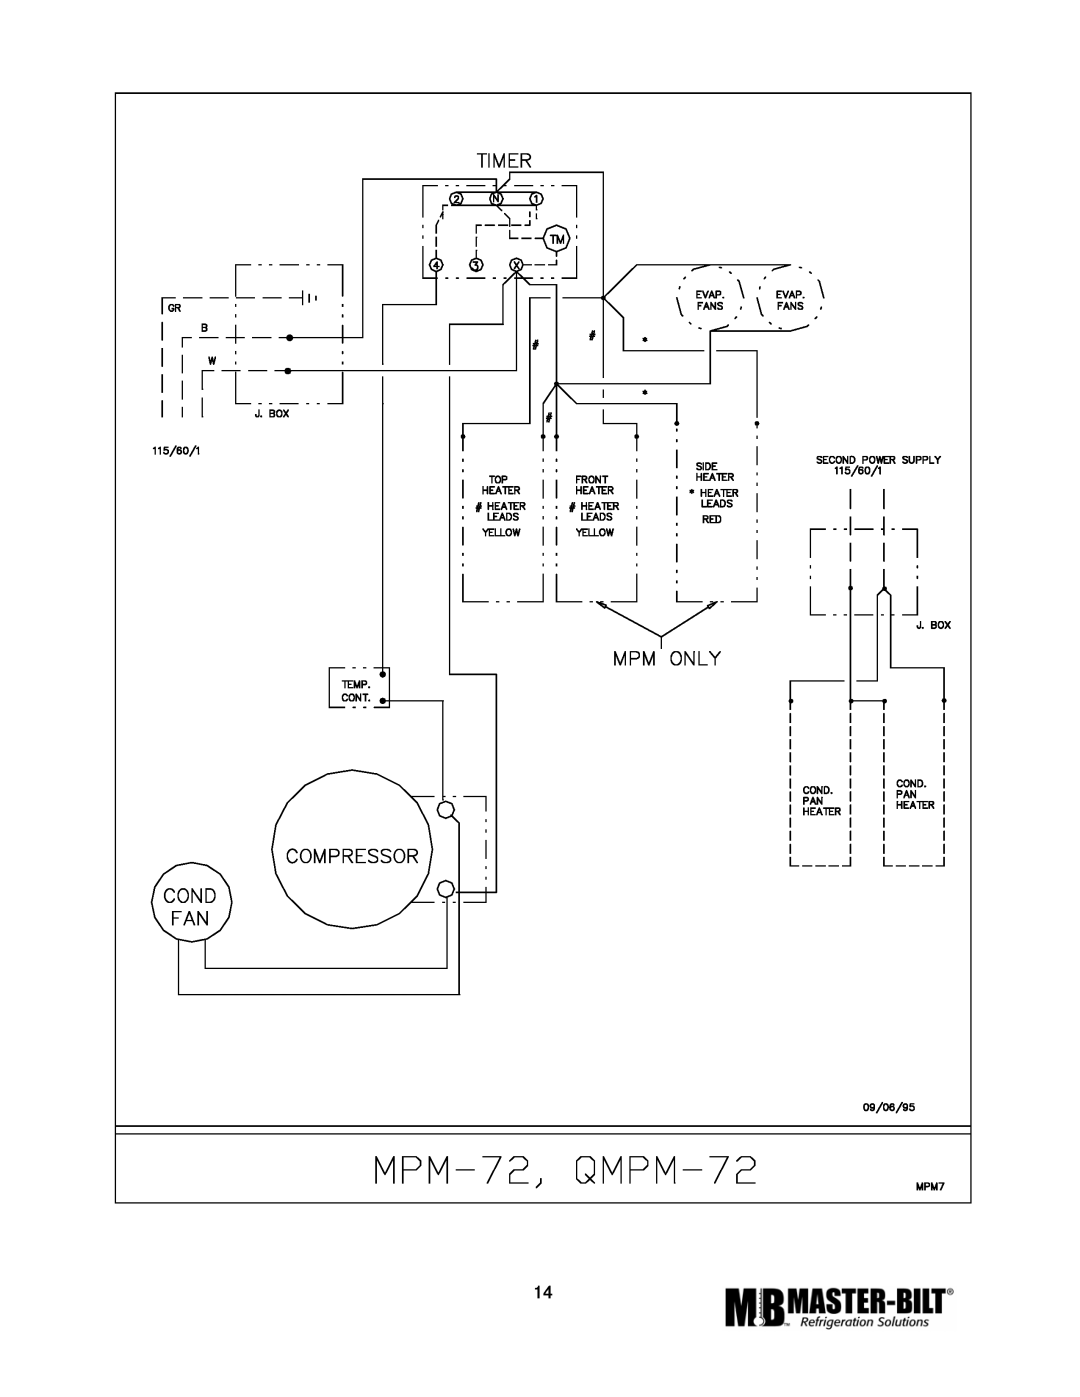 Master Bilt MPM-72 manual 